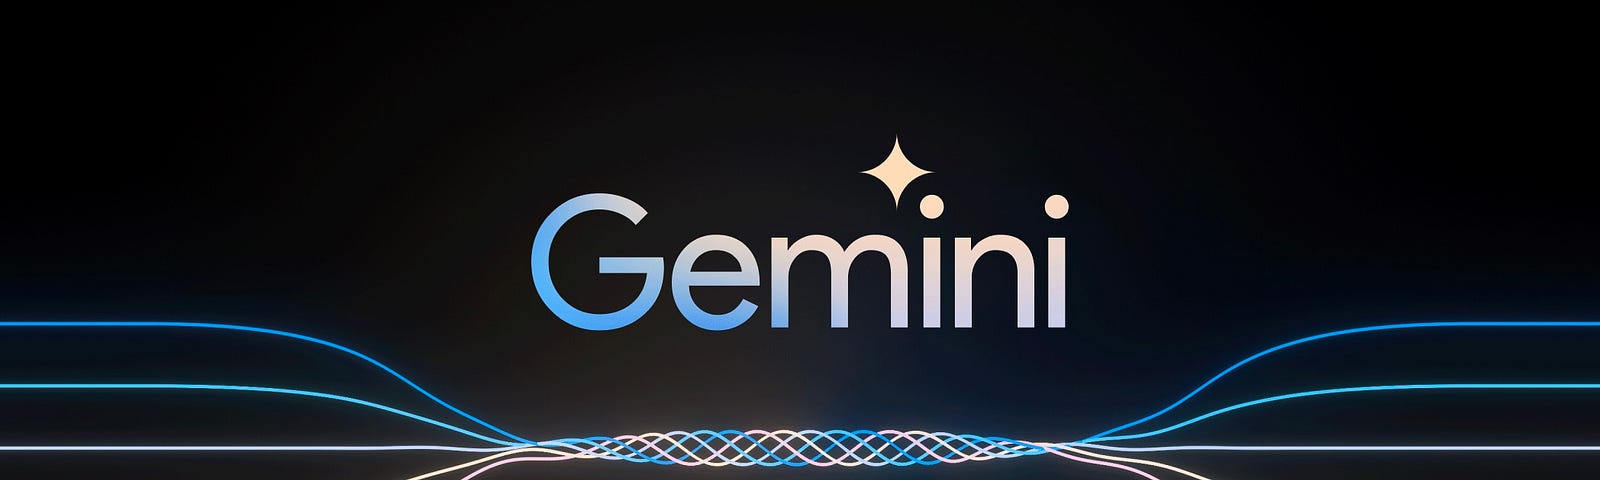 IMAGE: Google Gemini logo as shown in the Google blog